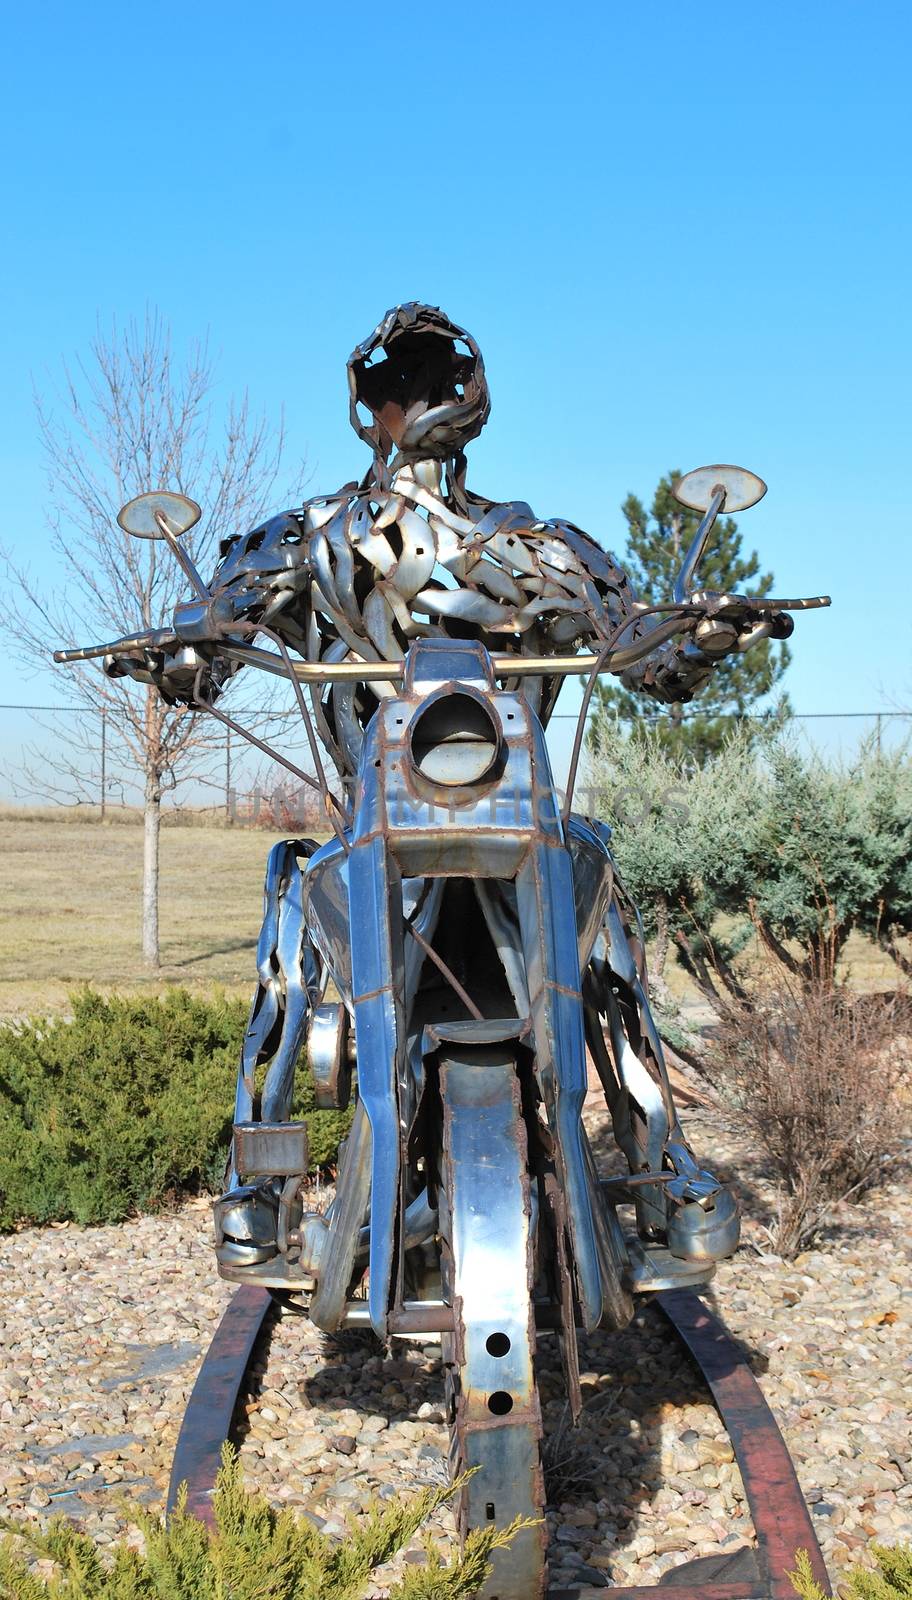 Freedom biker displayed outdoors.